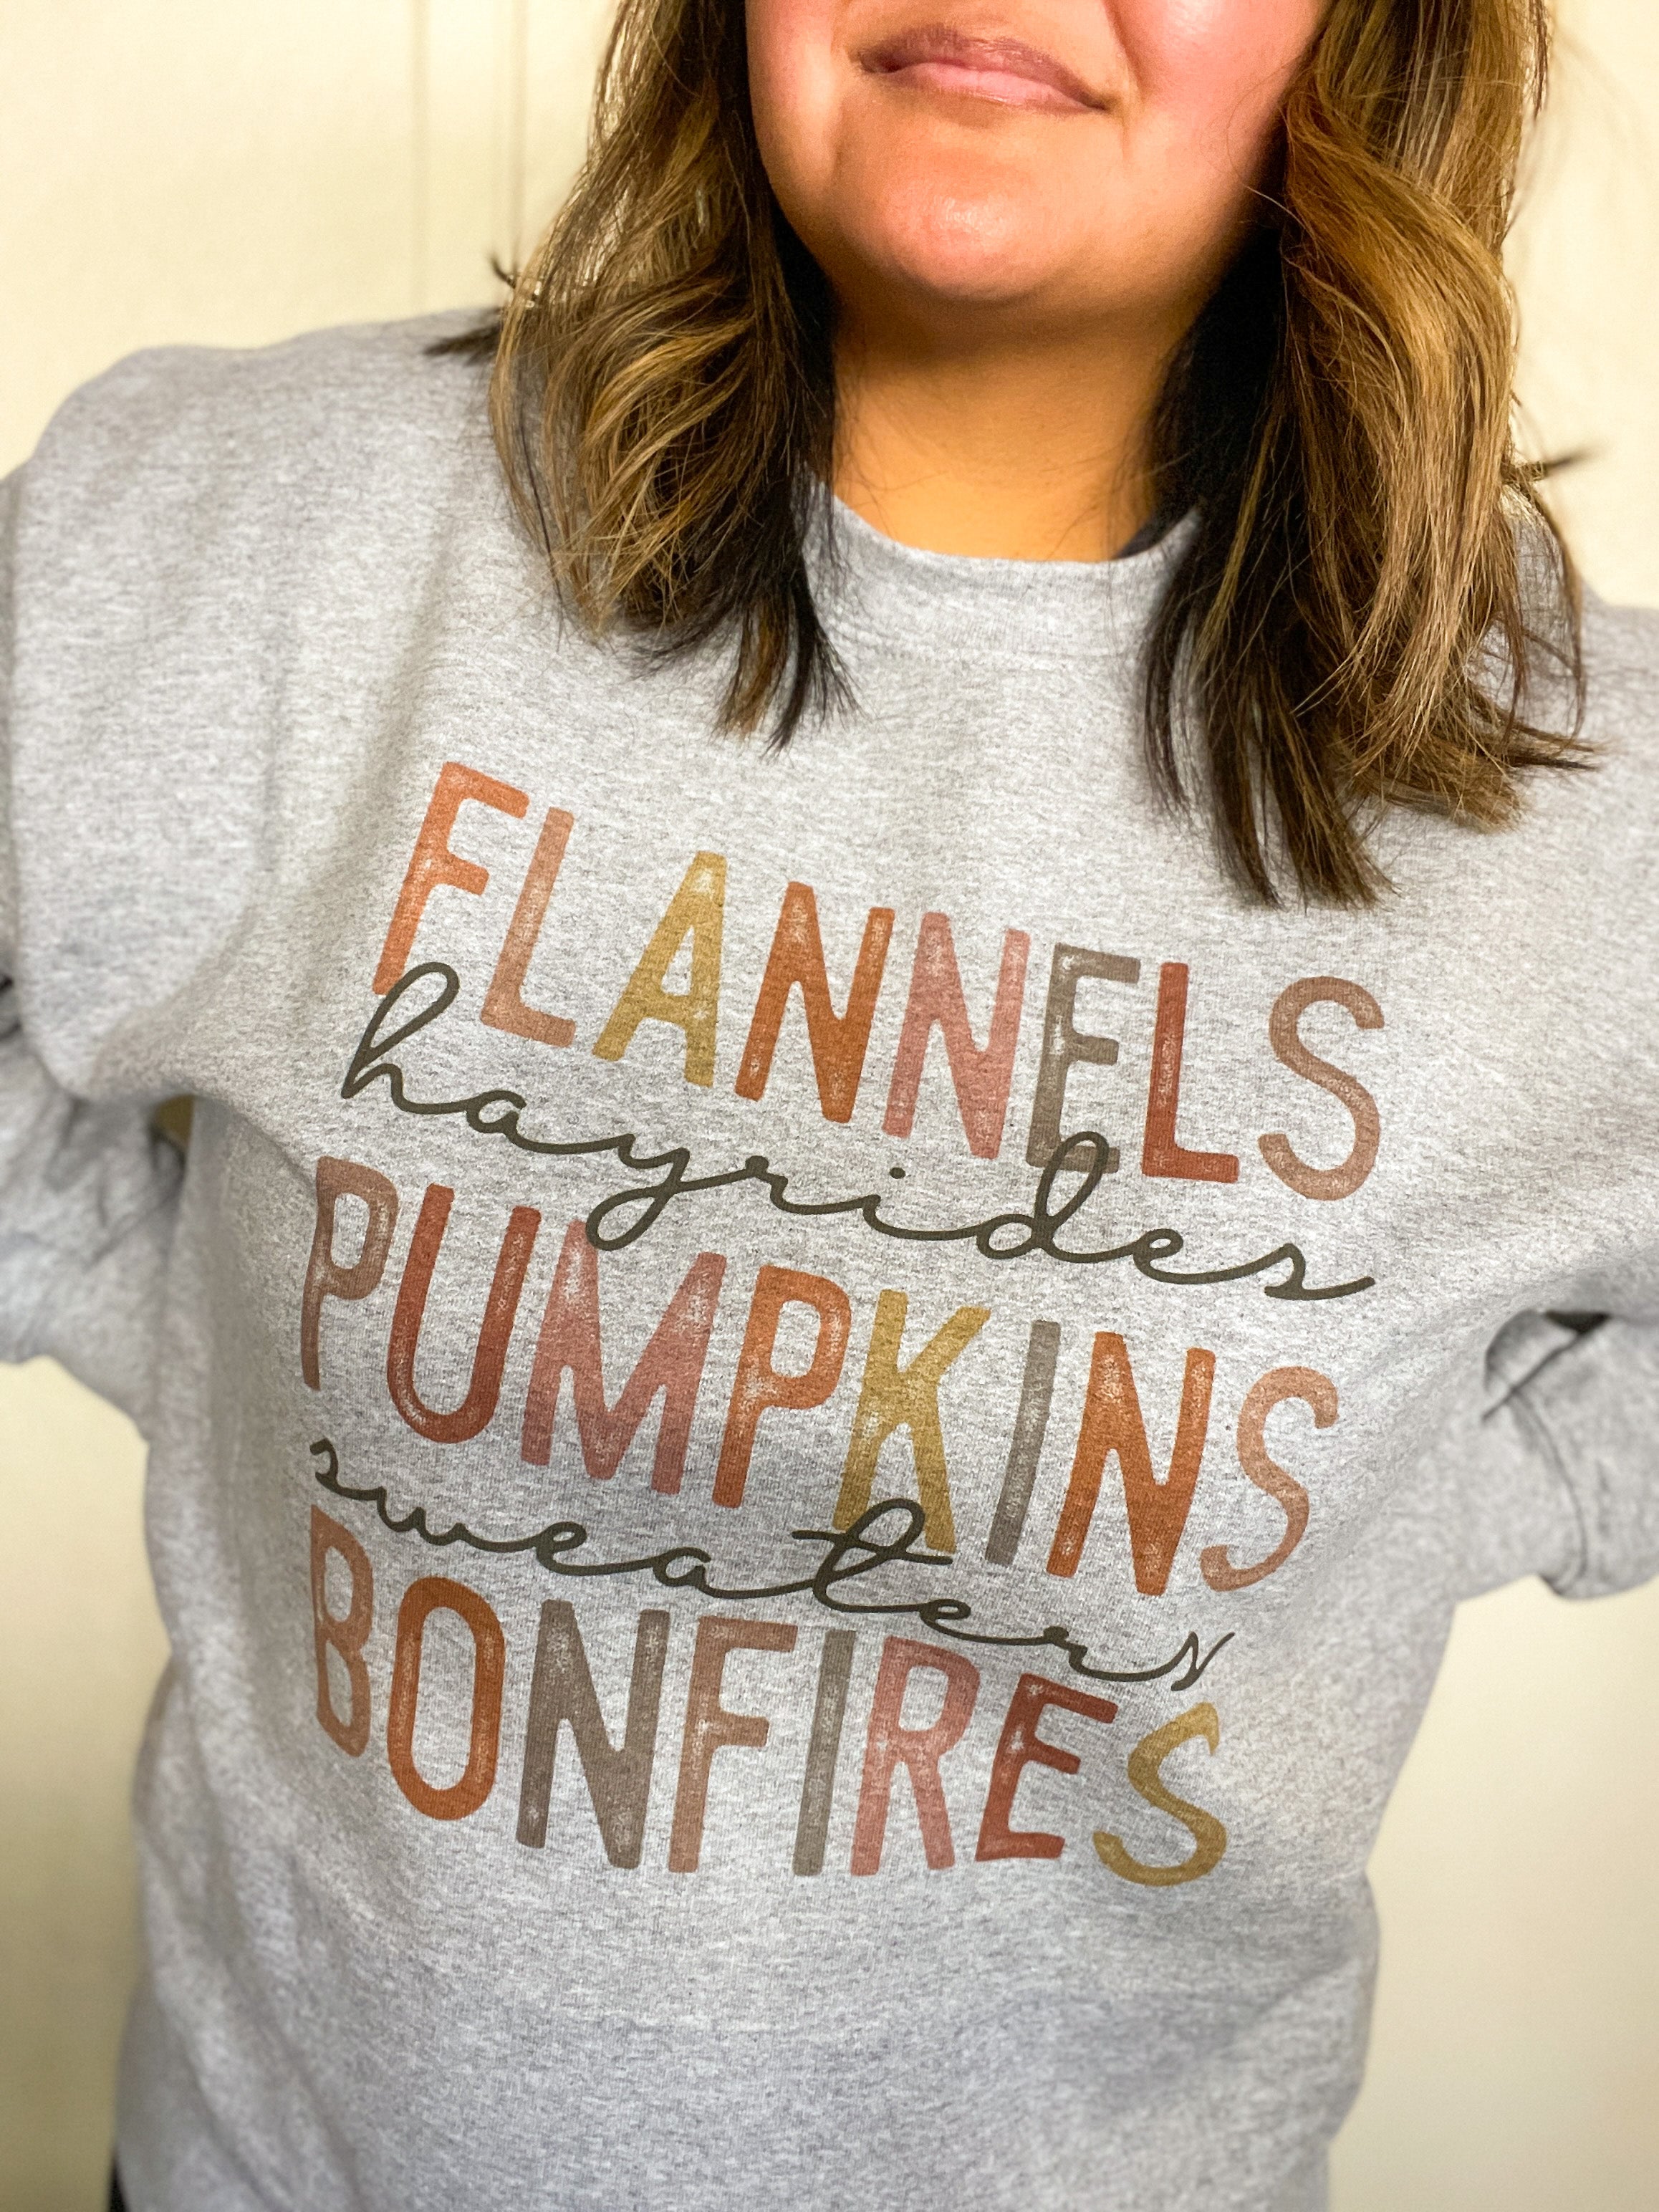 Flannels Pumpkins Bonfires - Adult Unisex Pullover